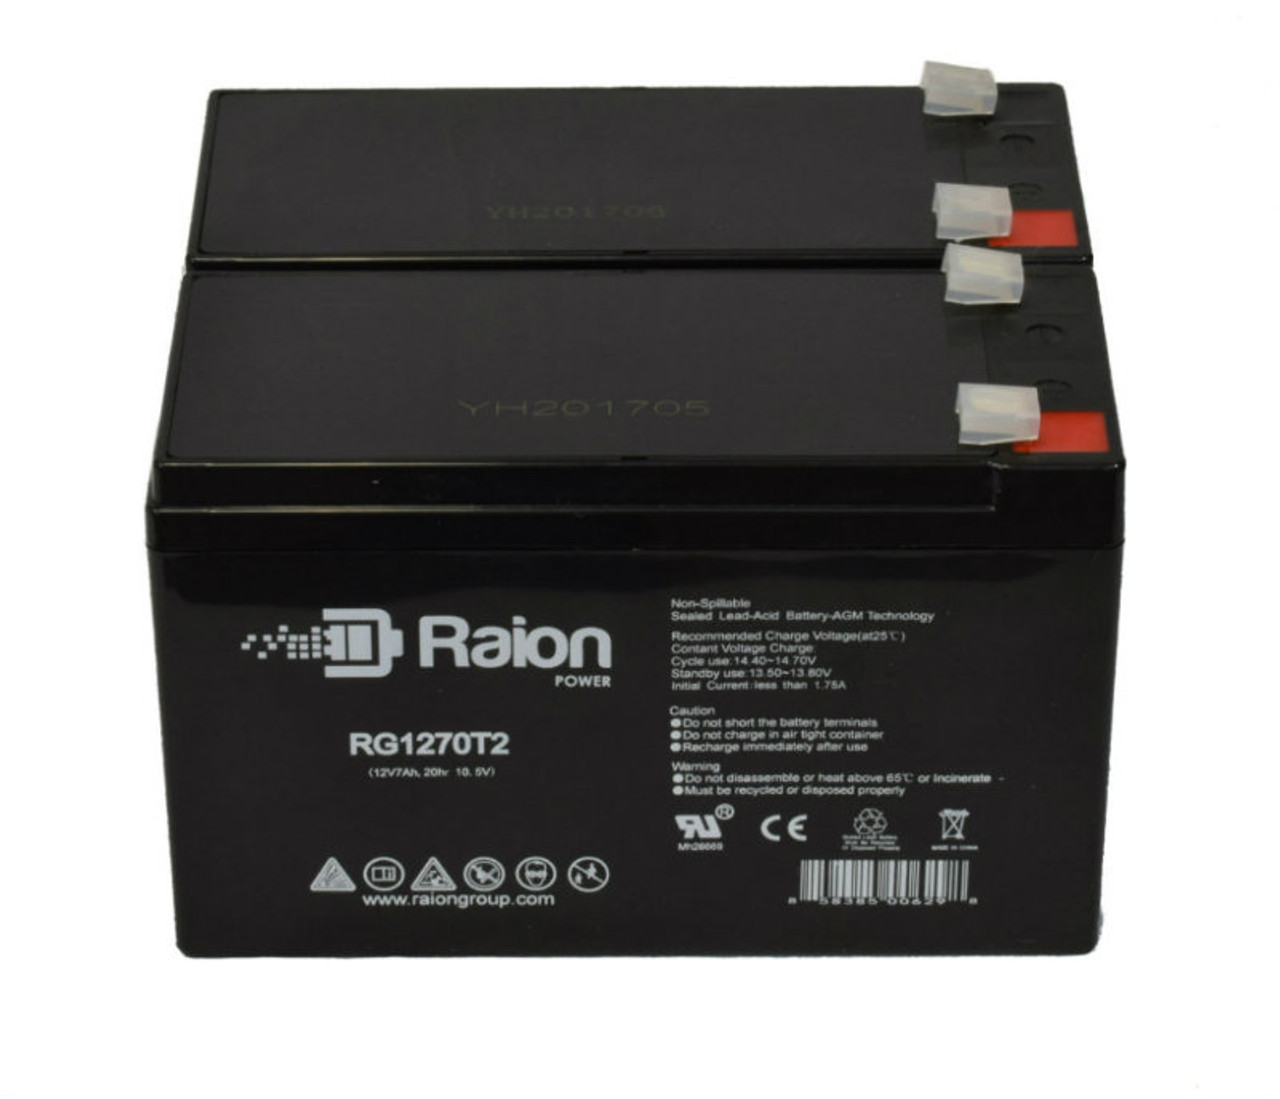 Raion Power Replacement 12V 7Ah Battery for Unikor MxVolta VT1207 F1 - 2 Pack